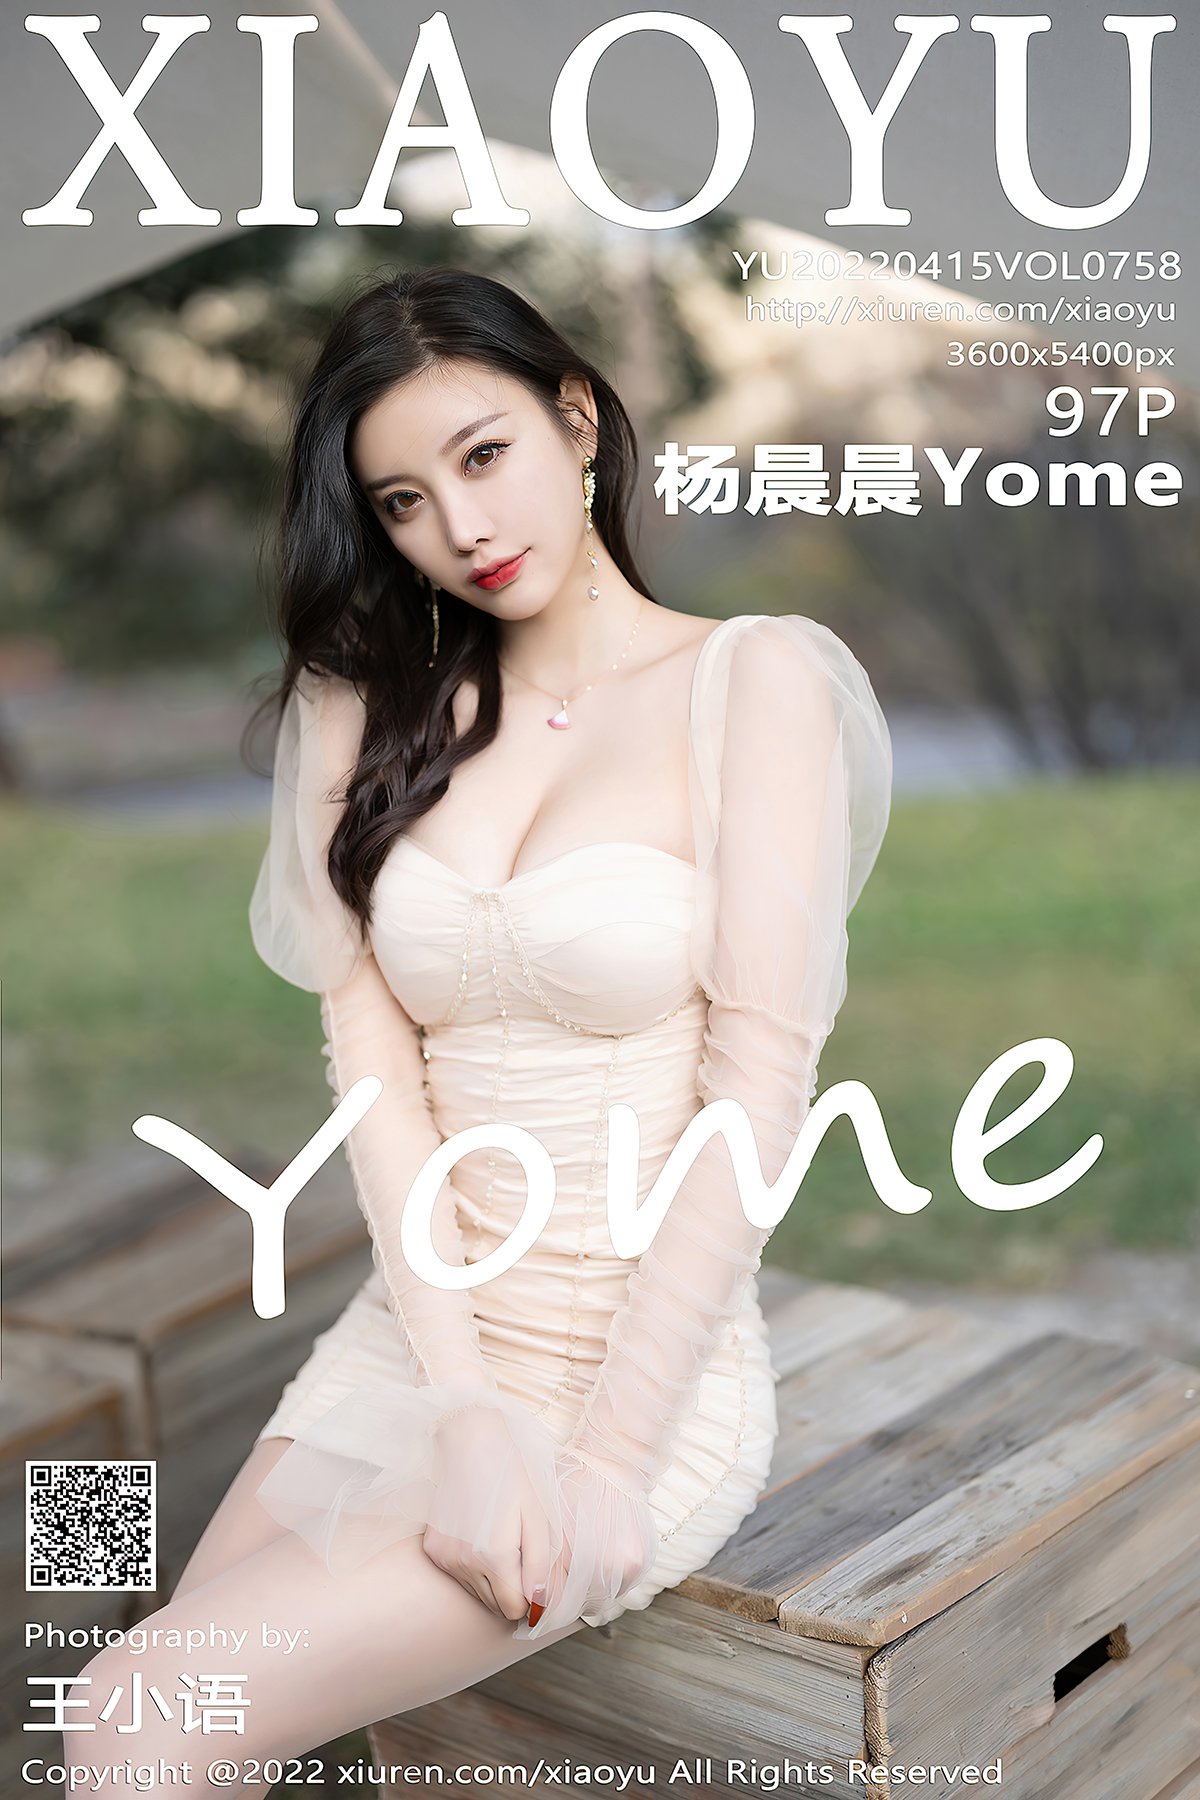 XiaoYu语画界 Vol.758 Yang Chen Chen Yome